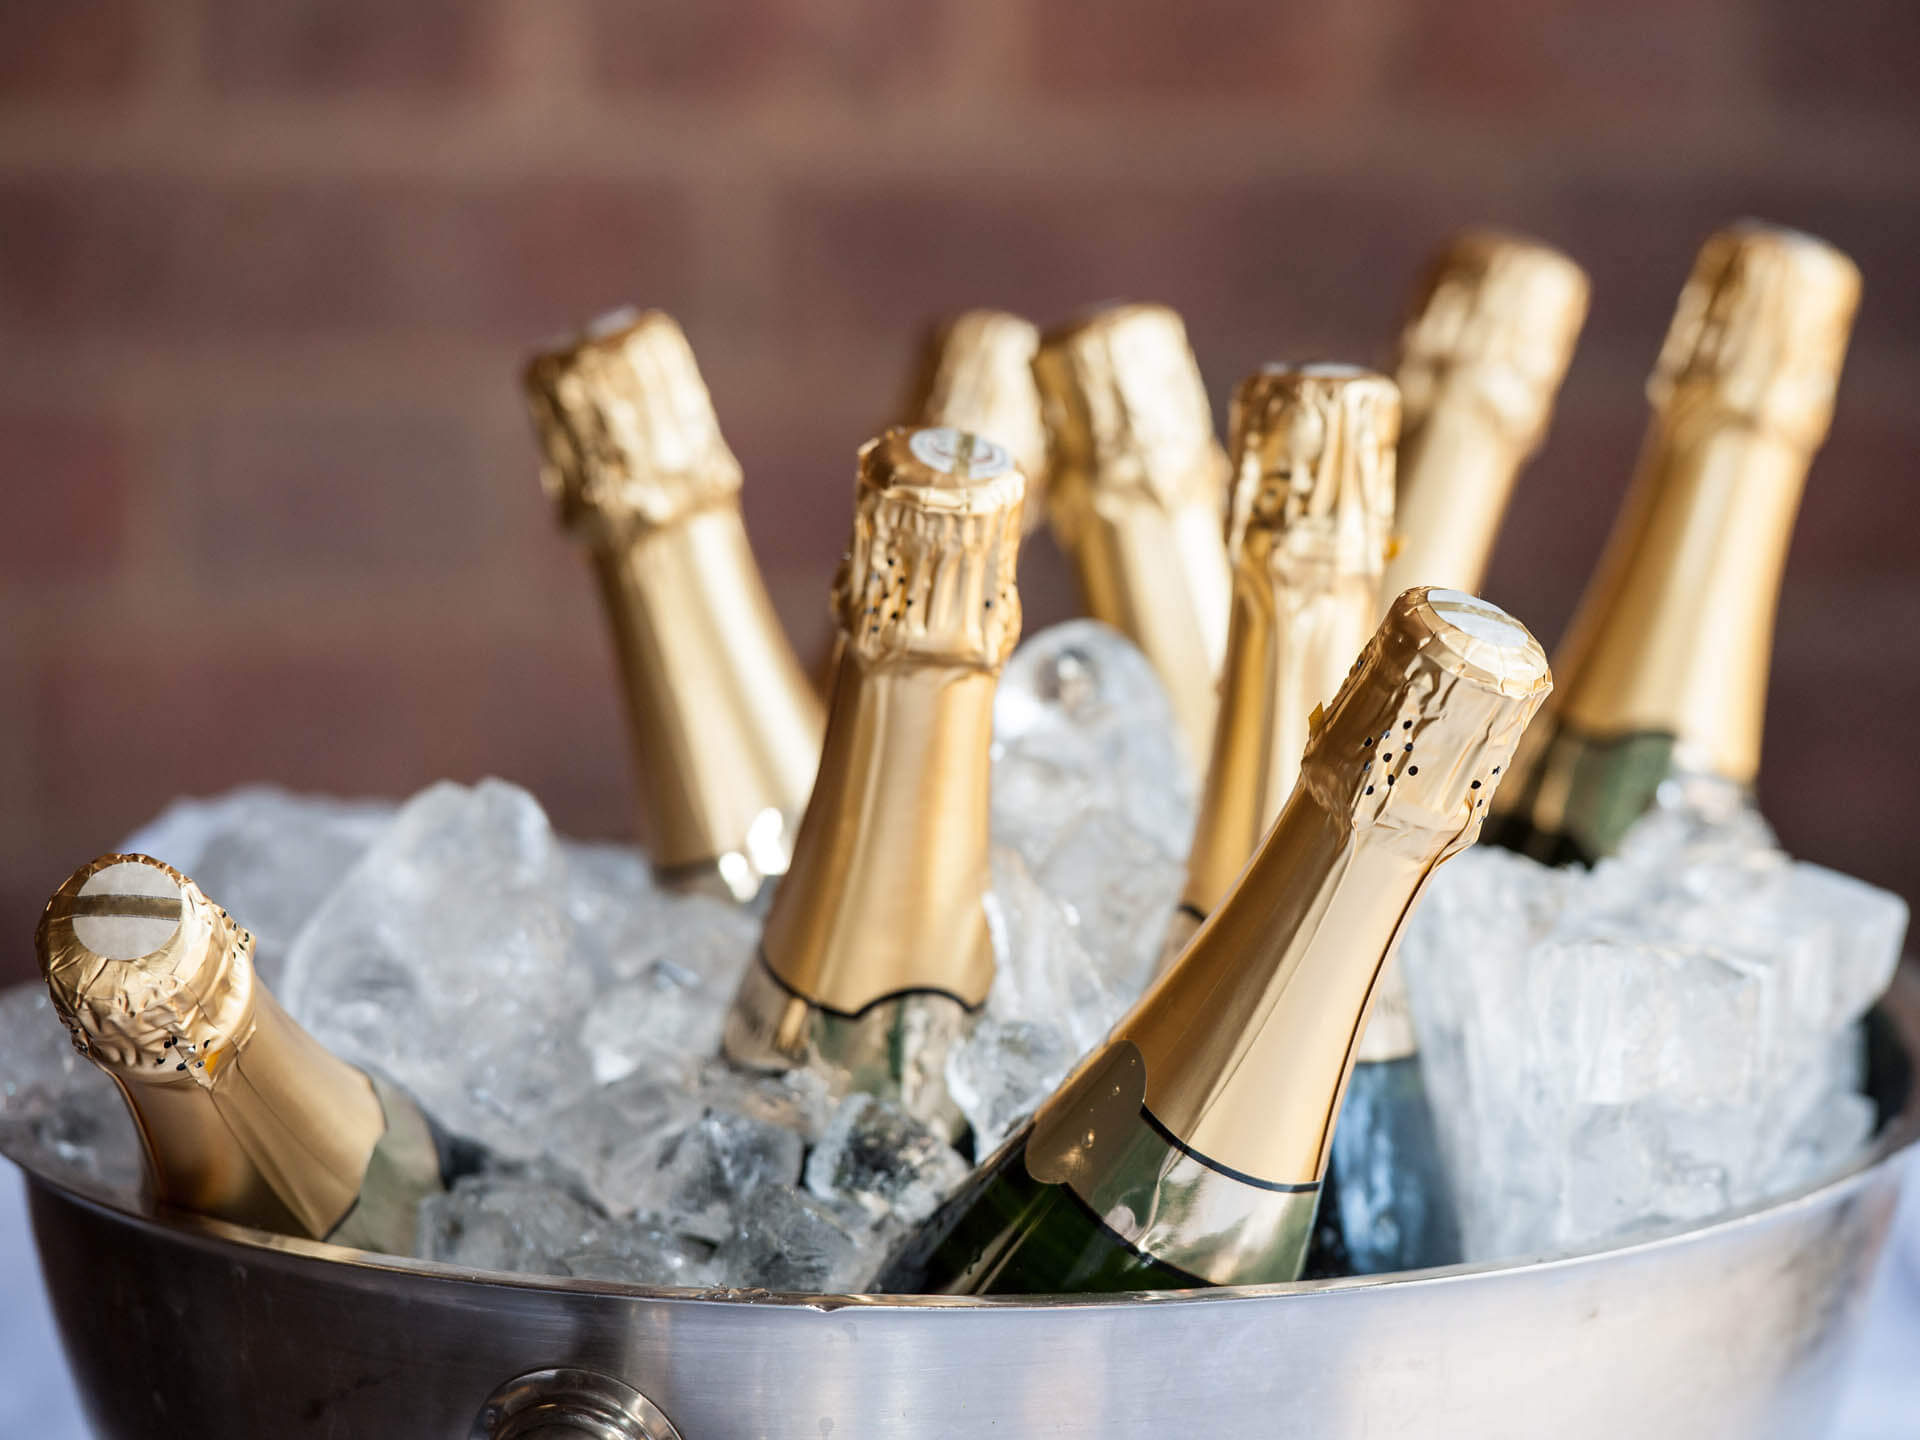 Champagne bottles in ice bucket